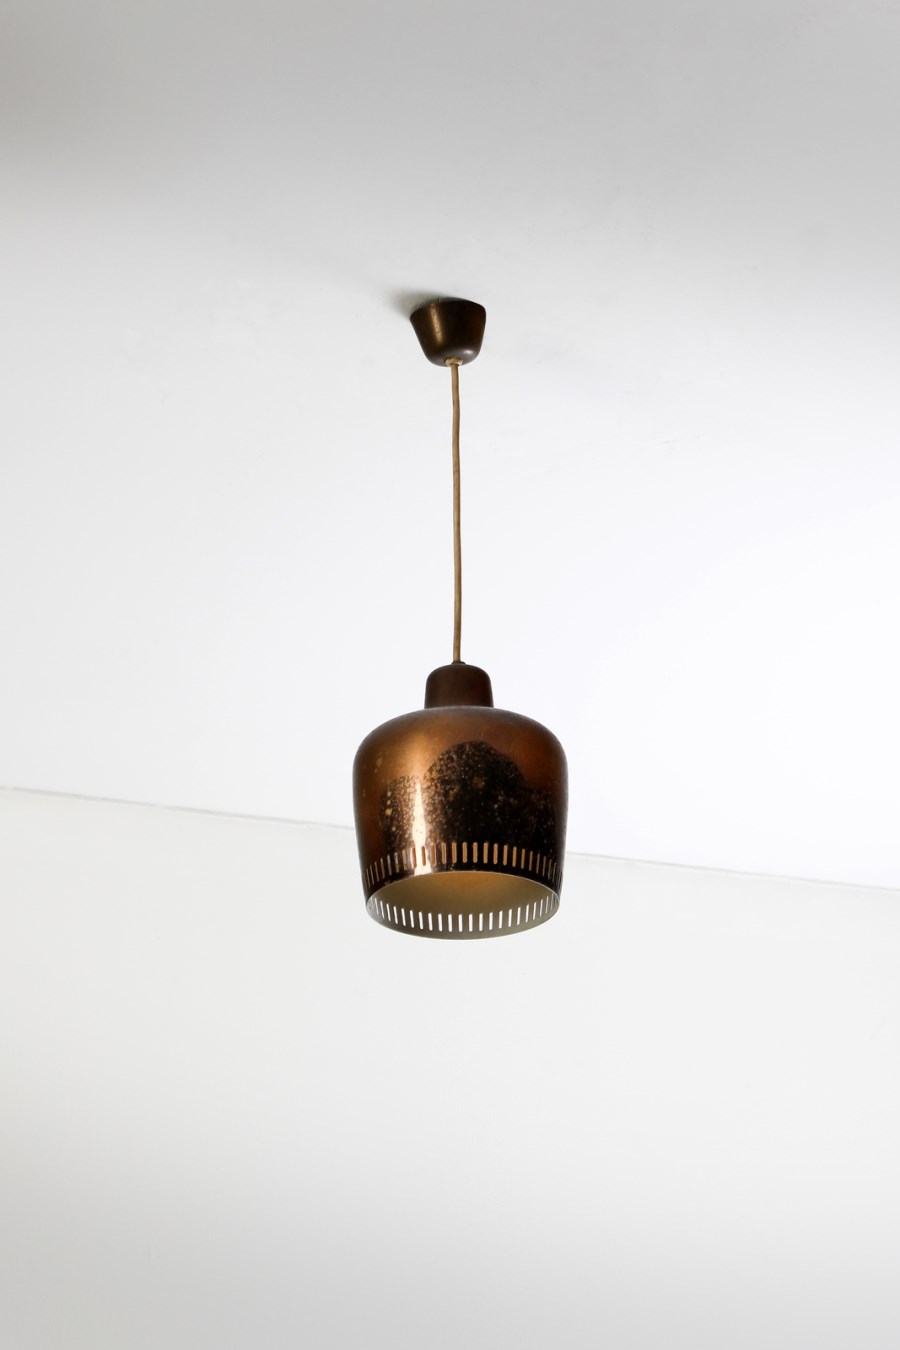 Lampada a sospensione Golden Bell produzione Artek (Alvar Aalto)